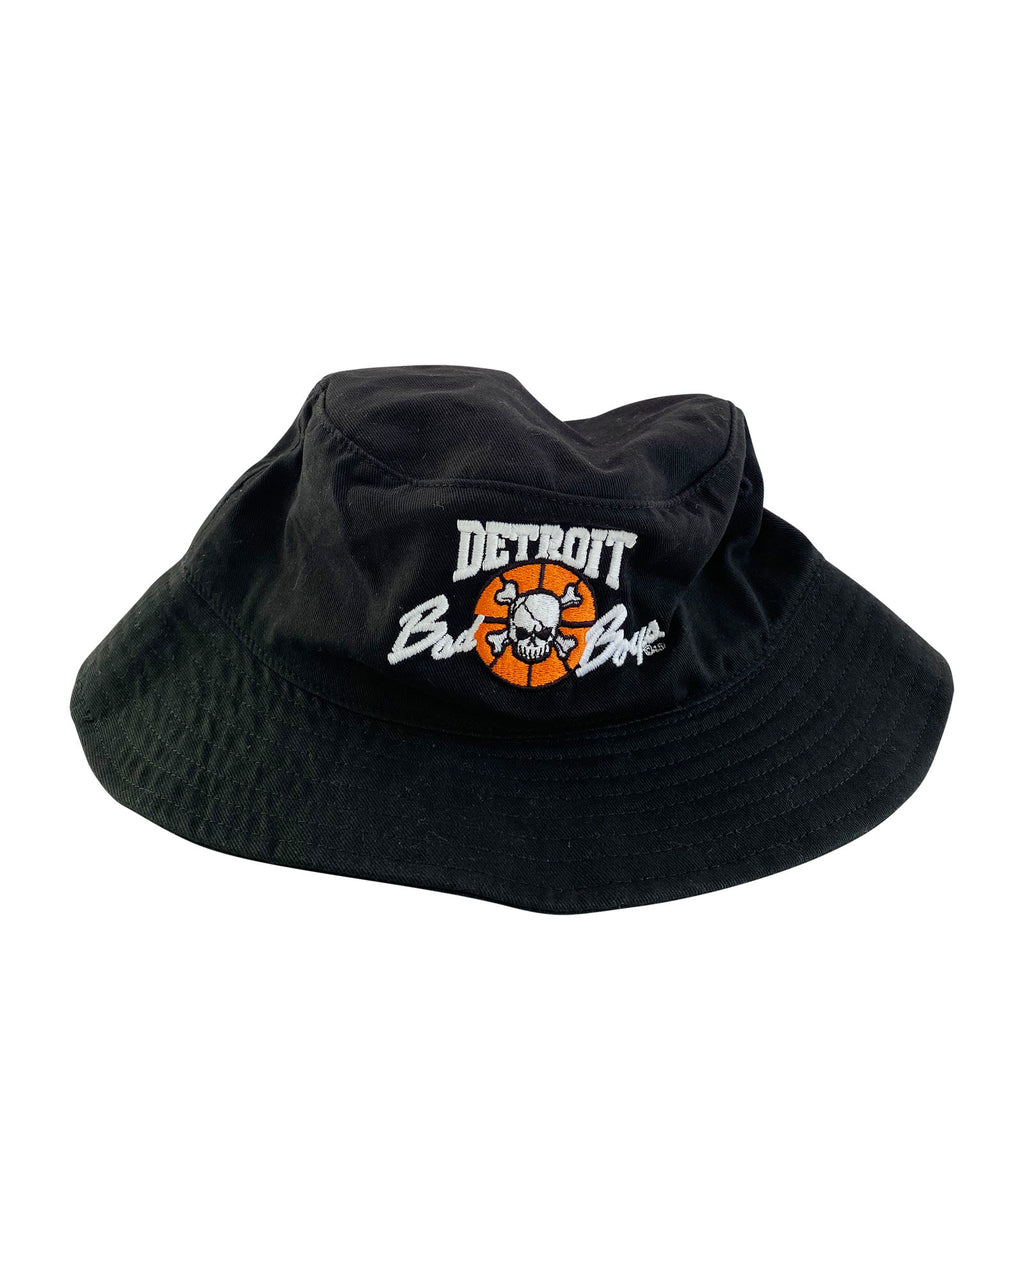 Authentic Detroit Bad Boys Black Bucket Hat